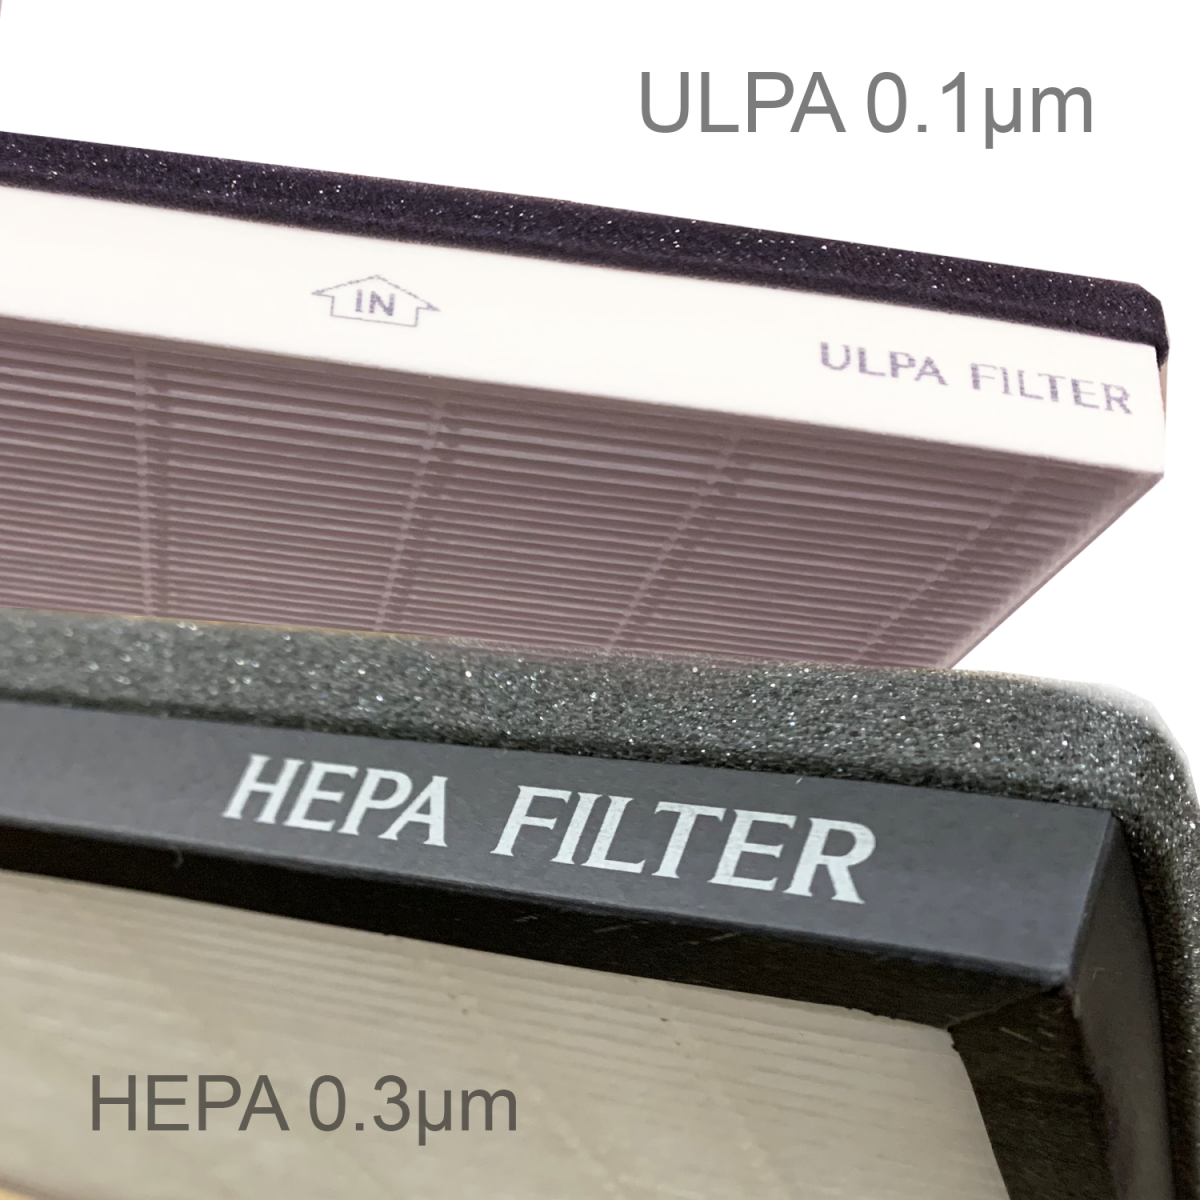 Bộ lọc ULPA và  bộ lọc HEPA